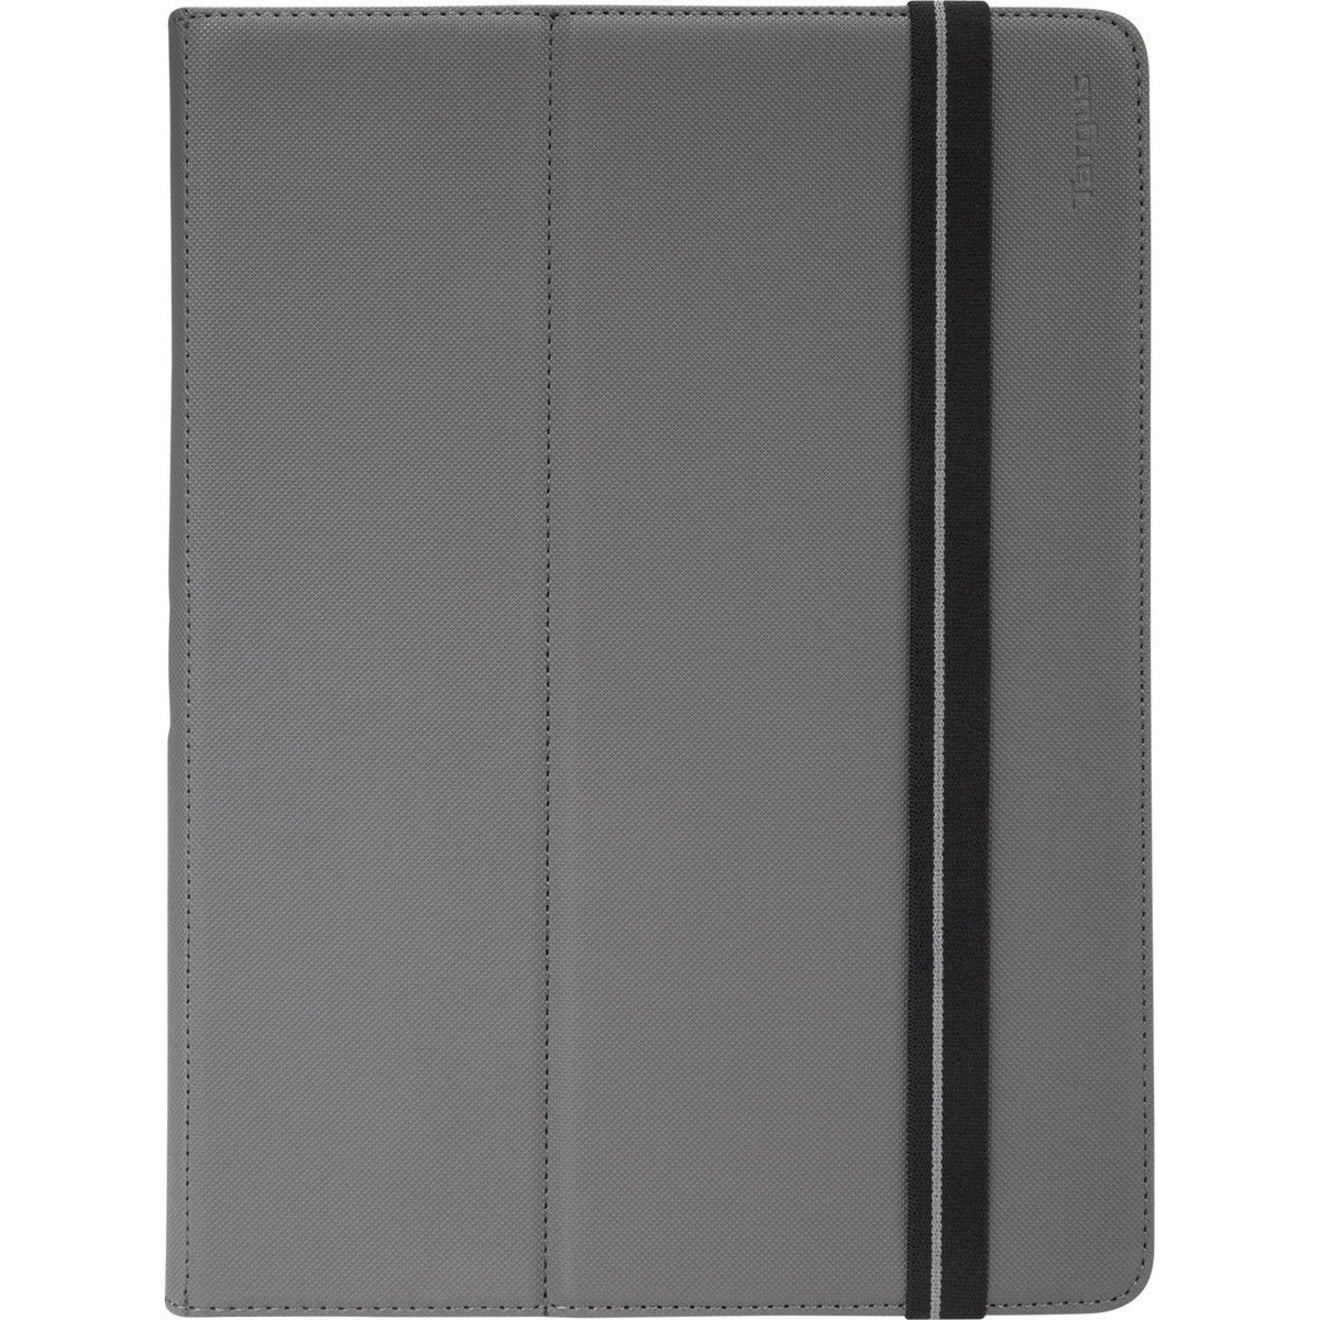 Targus Fit N' Grip THZ59203US Carrying Case for 10" Apple iPad 2 iPad (3rd Generation) iPad (4th Generation) iPad Air - Gray